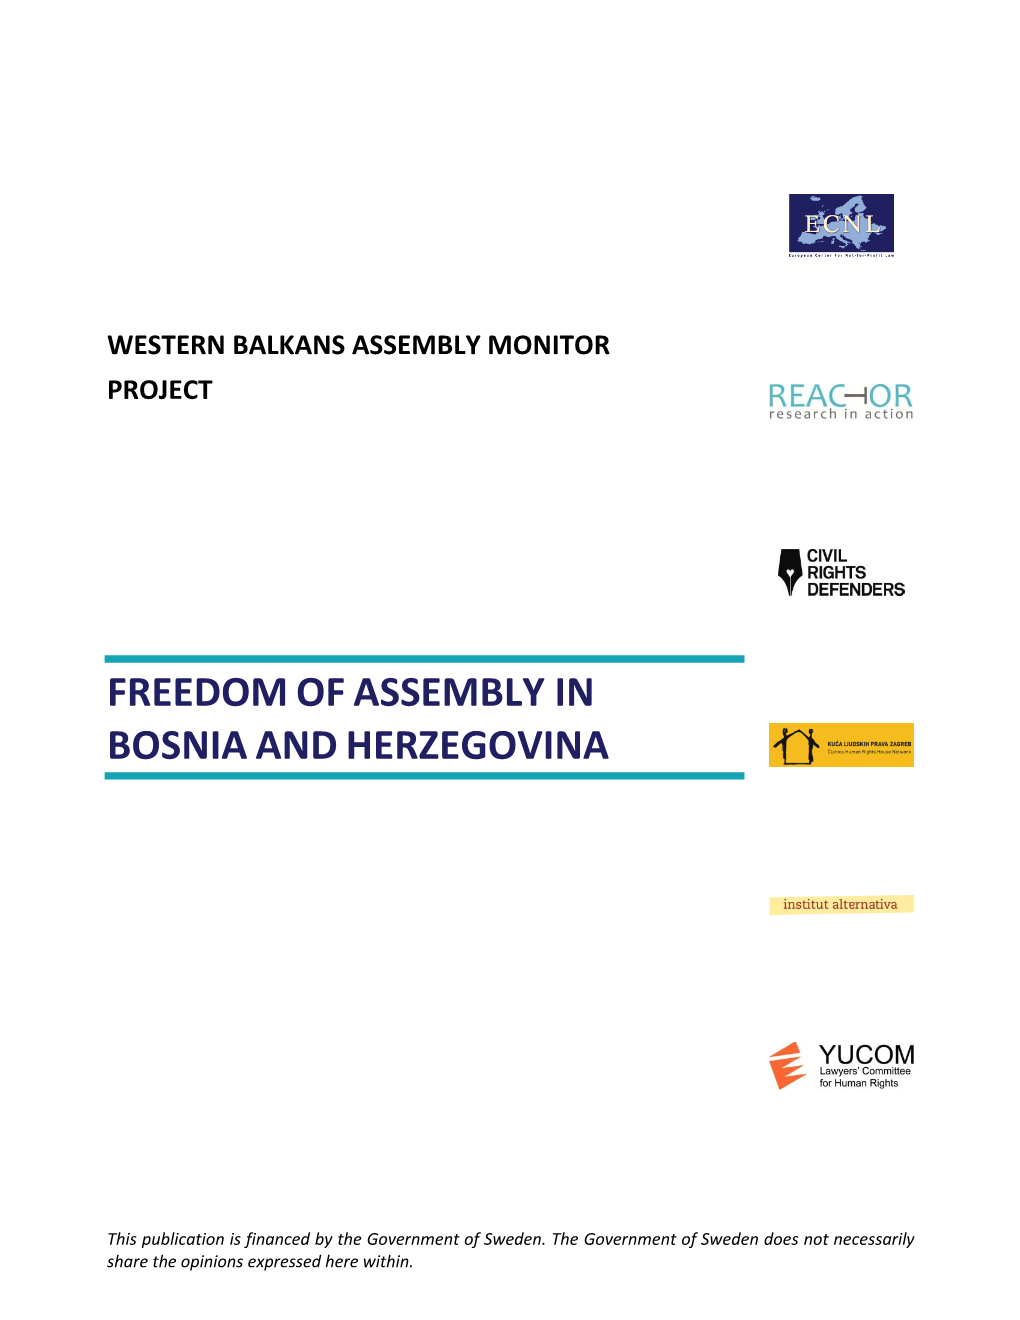 Freedomofassembly in Bosniaandherzegovina